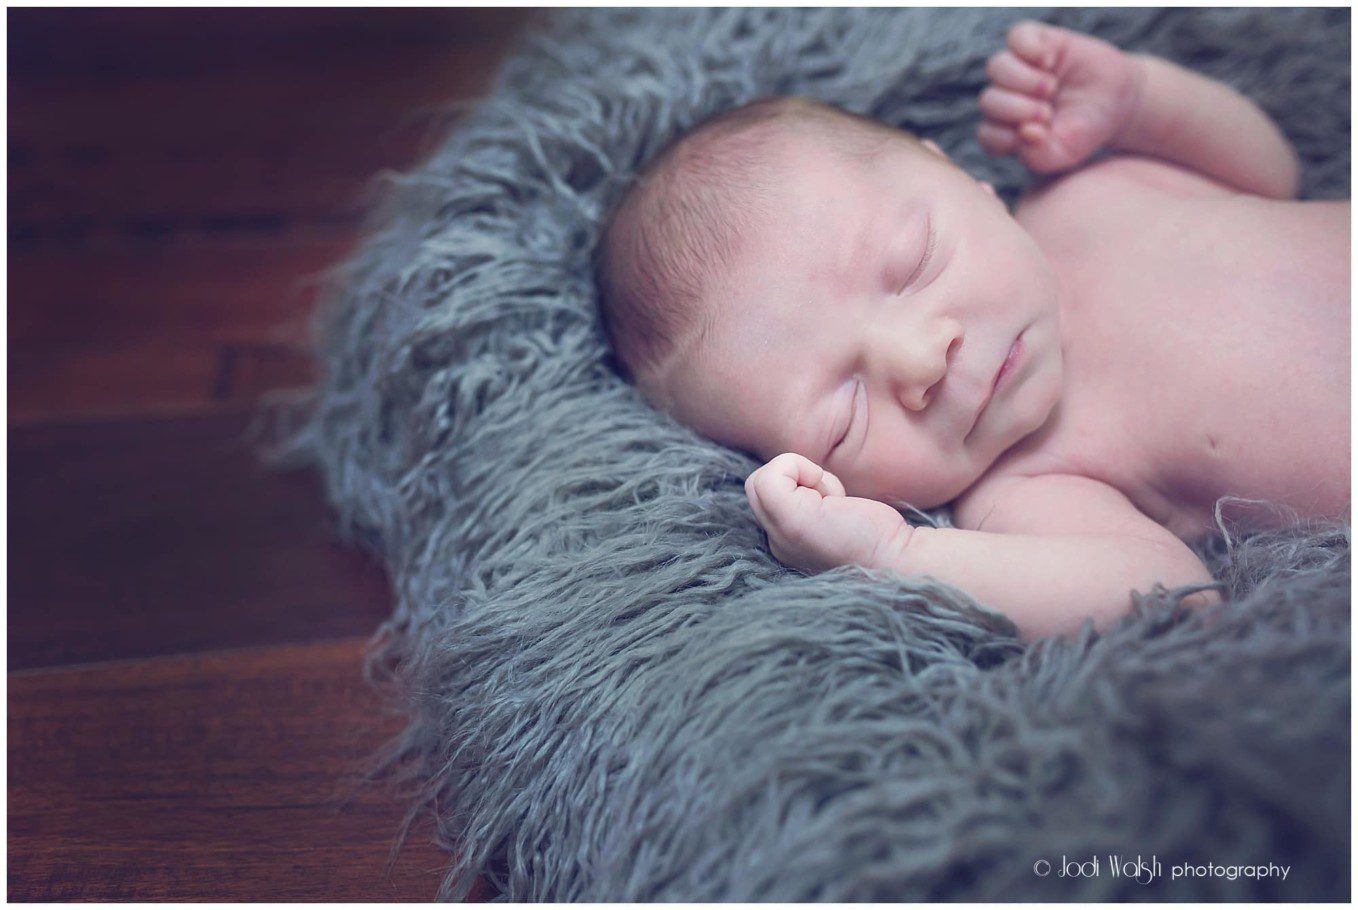 image of a newborn baby boy sleeping on a gray blue fuzzy blanket.